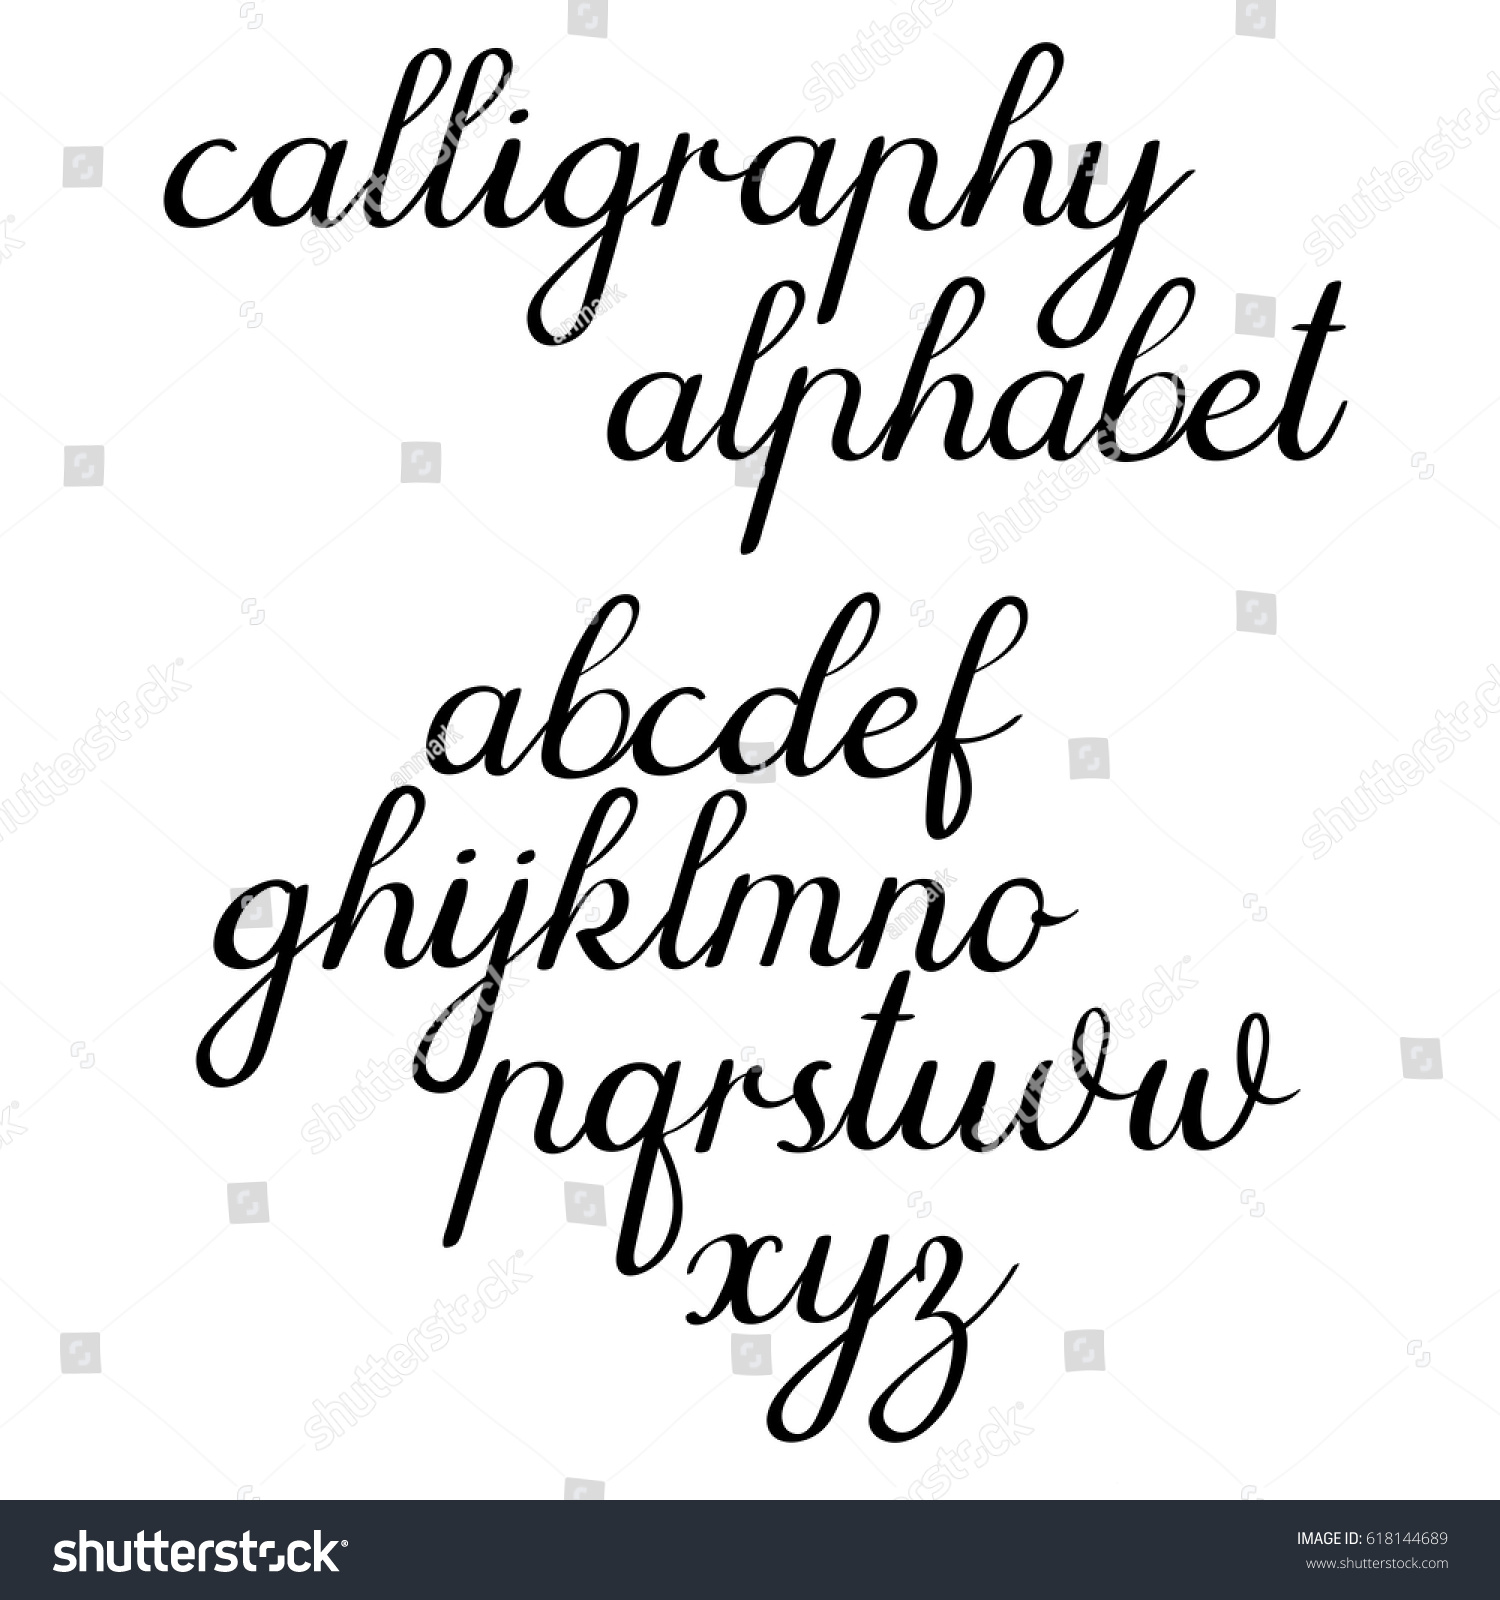 Calligraphic Vector Alphabet Hand Lettering Font Stock Vector 618144689 ...